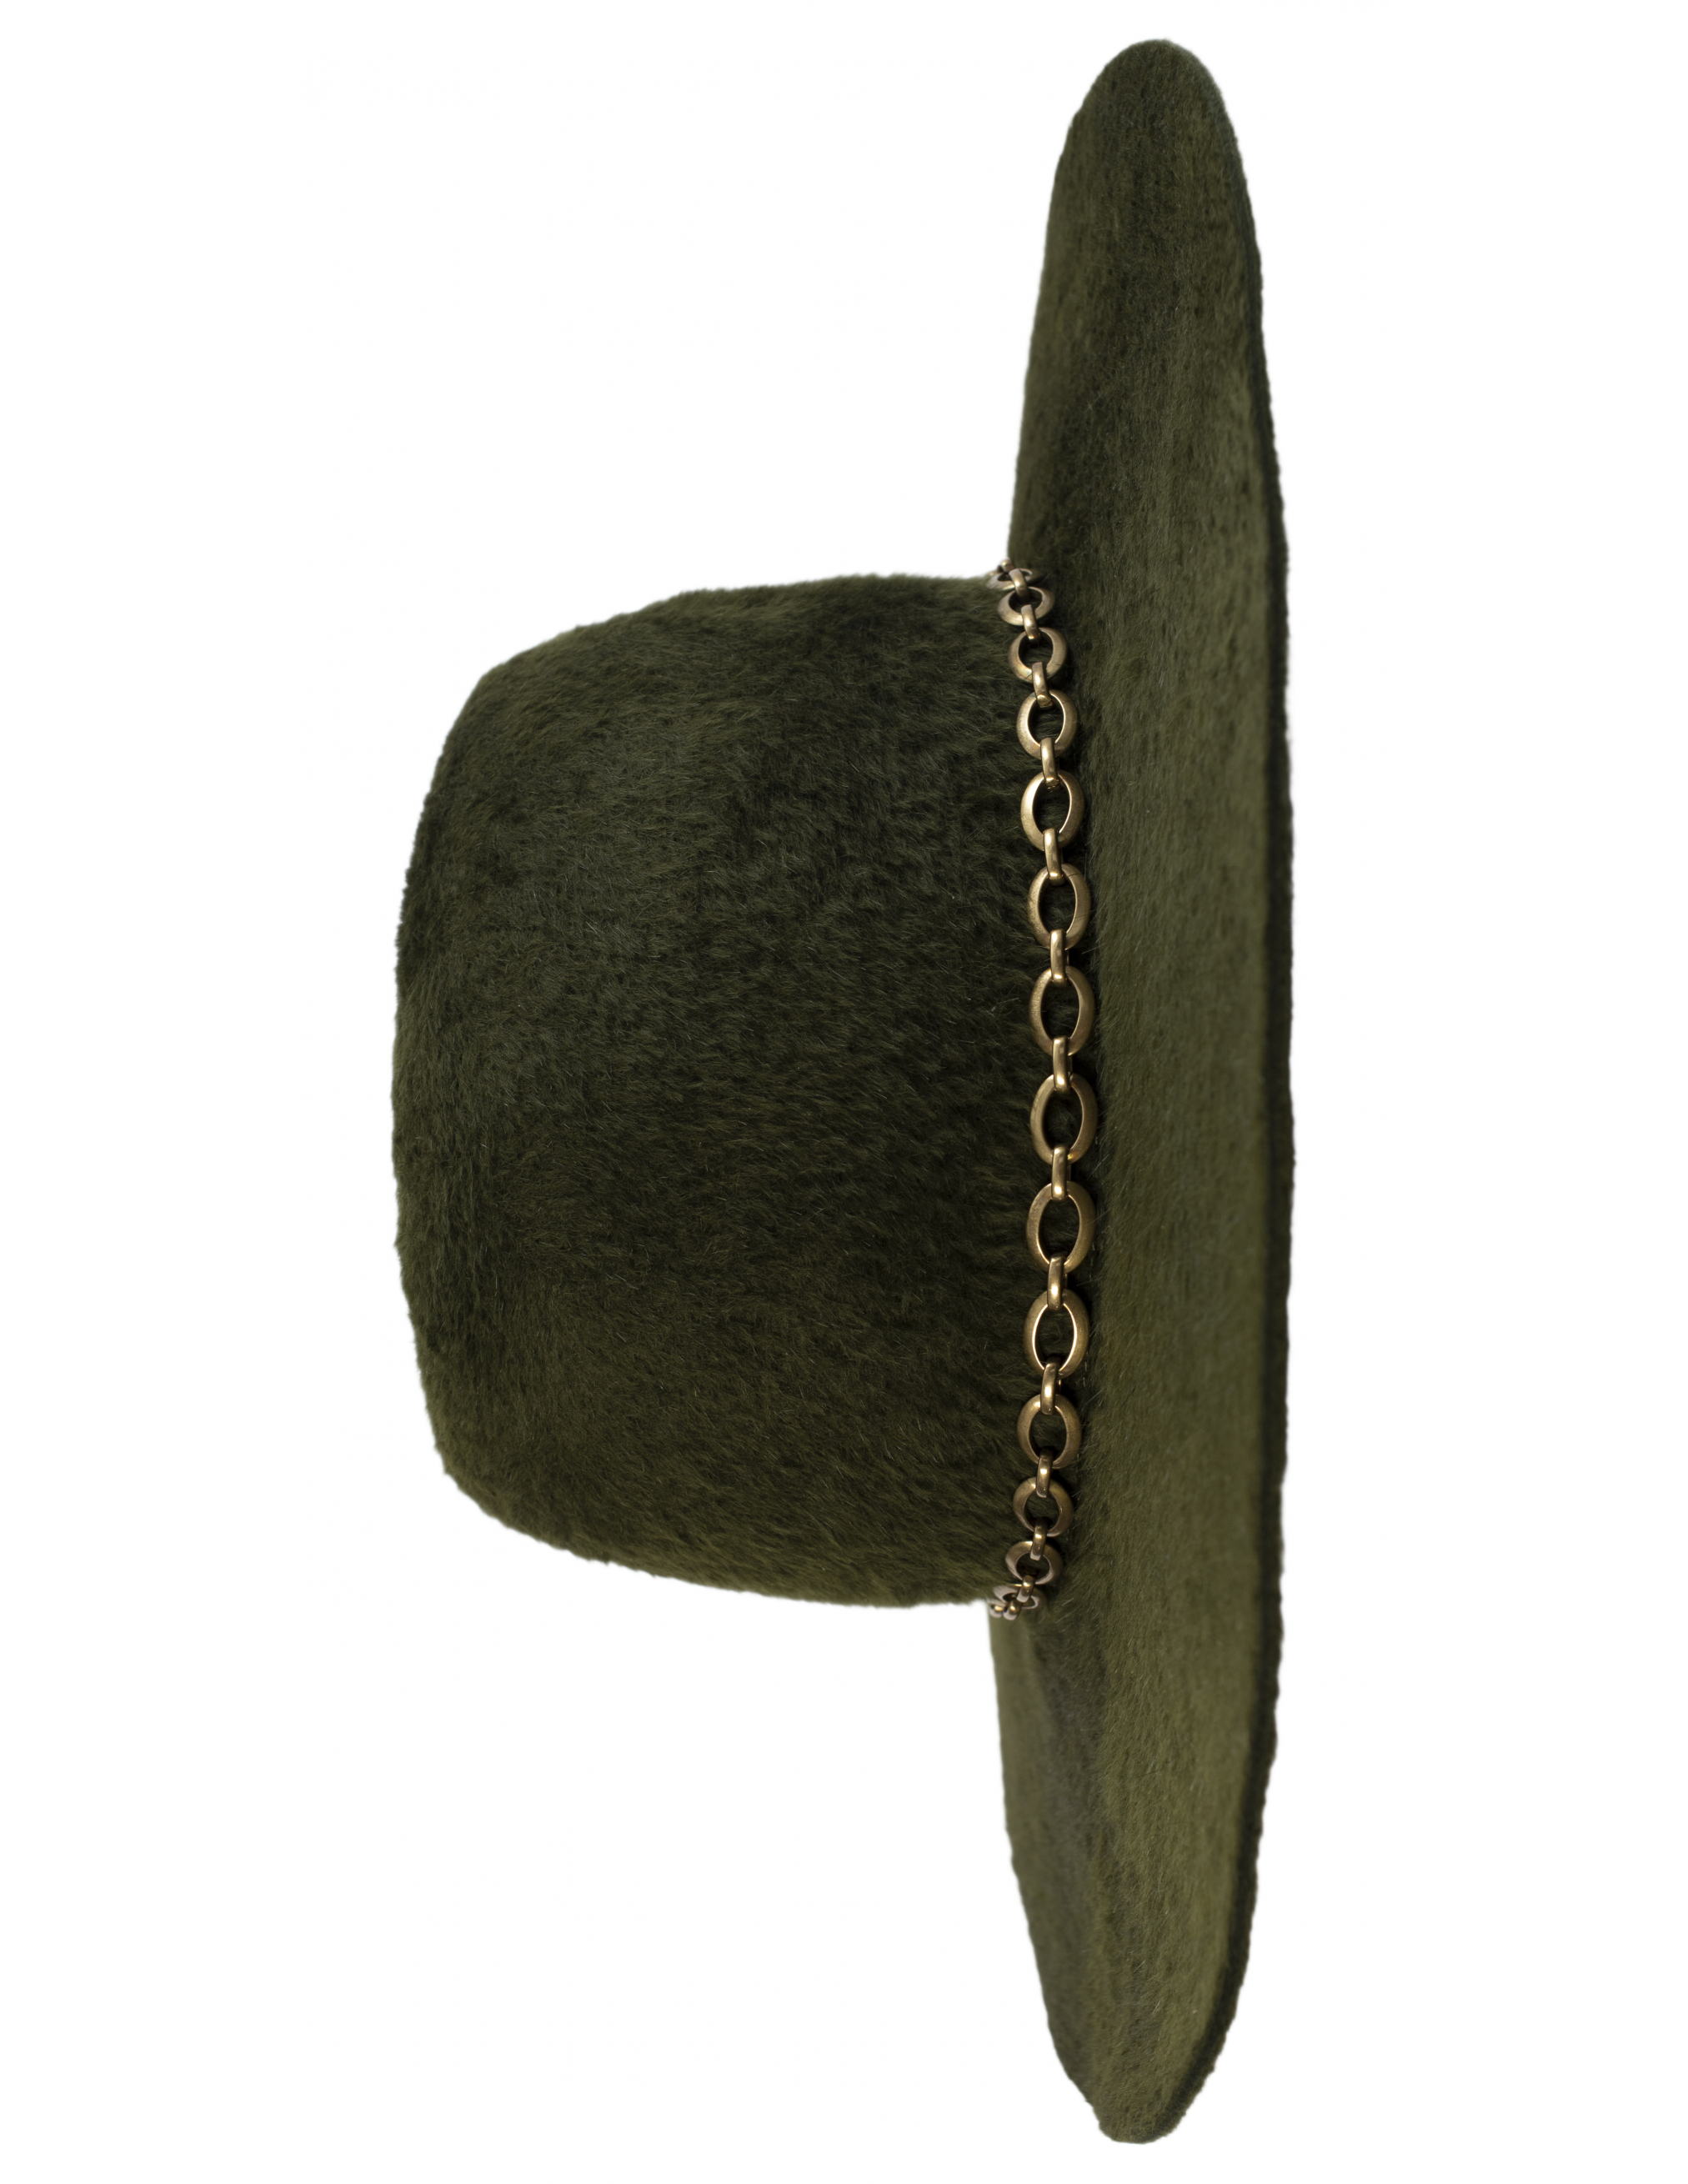 Зеленая шляпа с широкими полями Undercover UC2A1H01/grn, размер 1 UC2A1H01/grn - фото 1